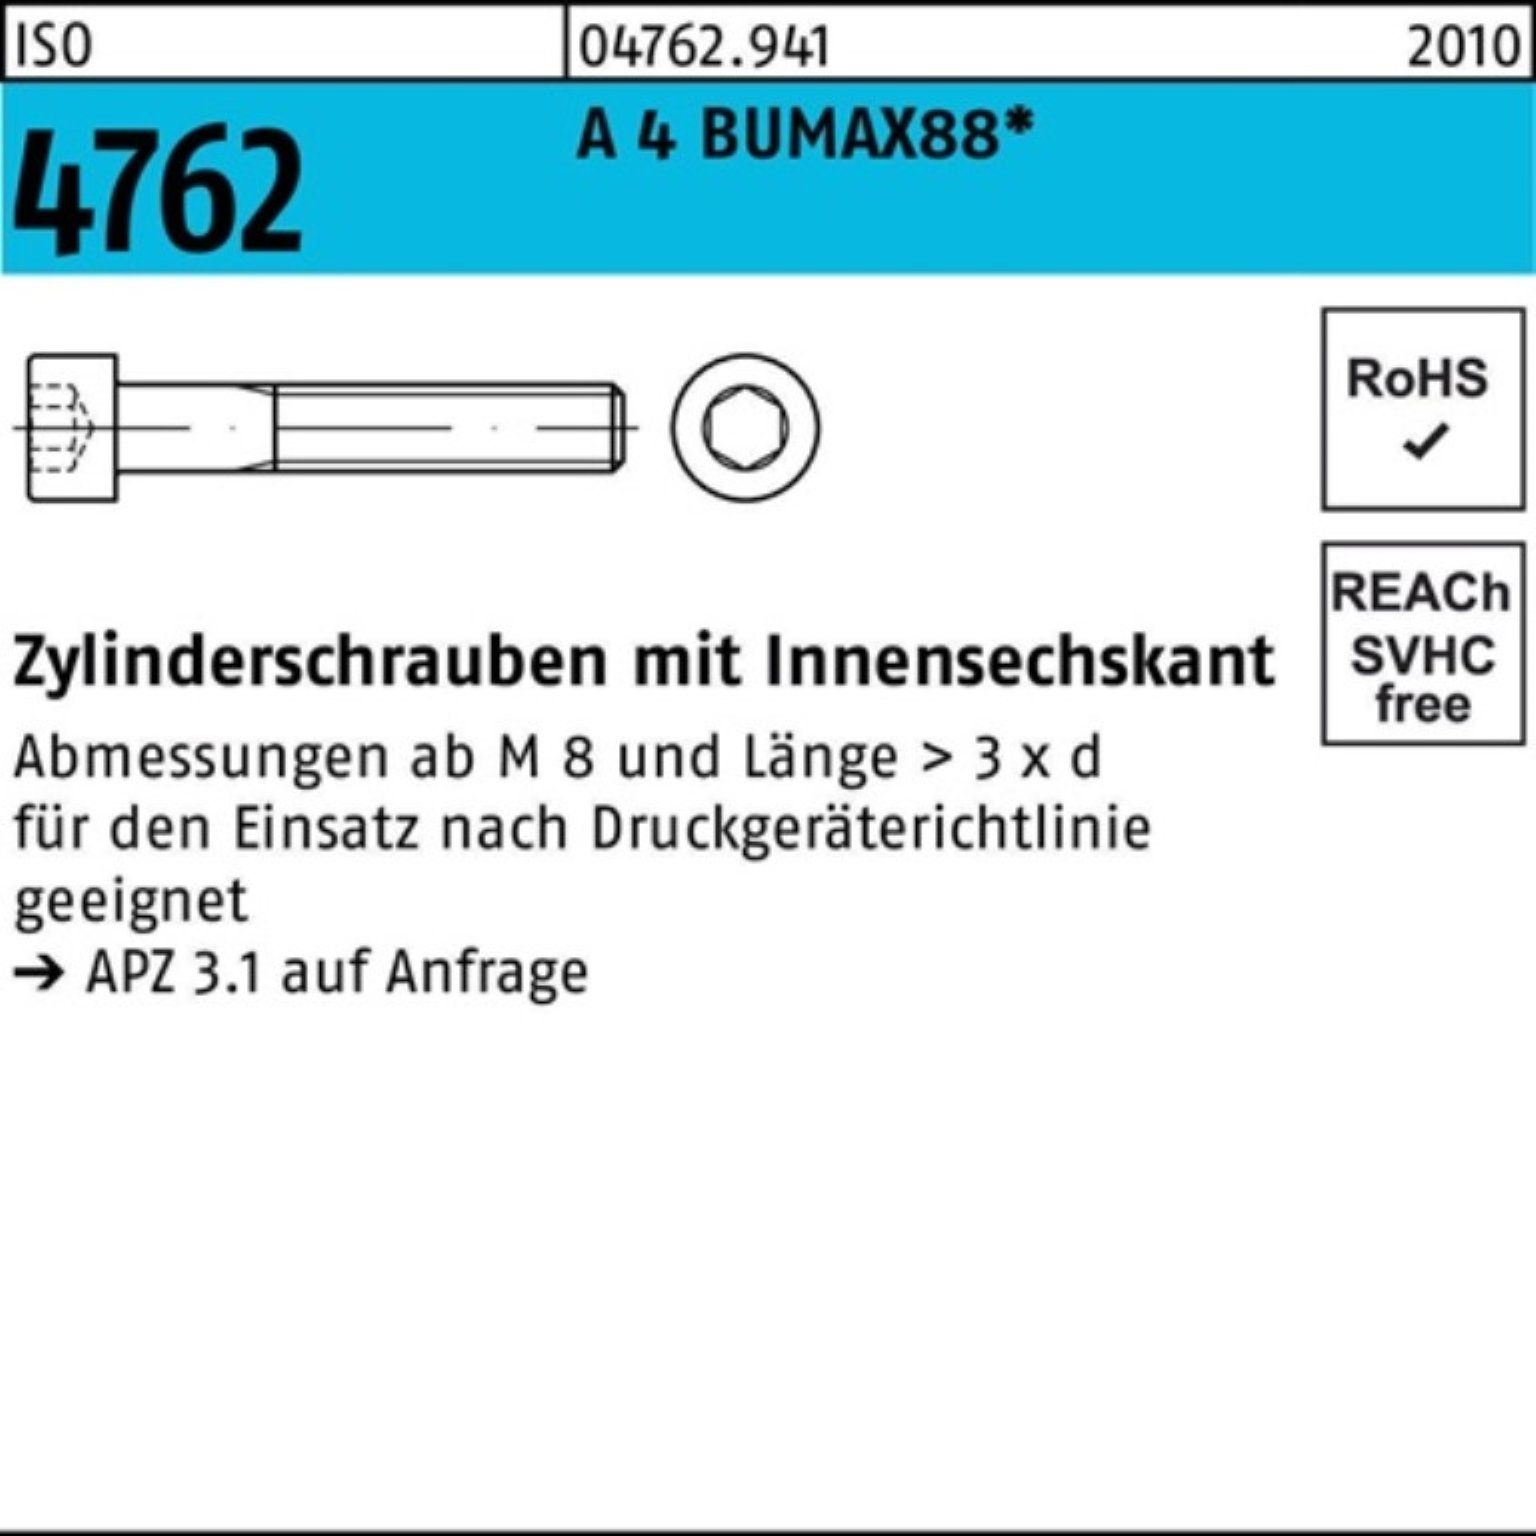 Bufab Zylinderschraube 100er Pack Zylinderschraube ISO 4762 Innen-6kt M8x 40 A 4 BUMAX88 50 S